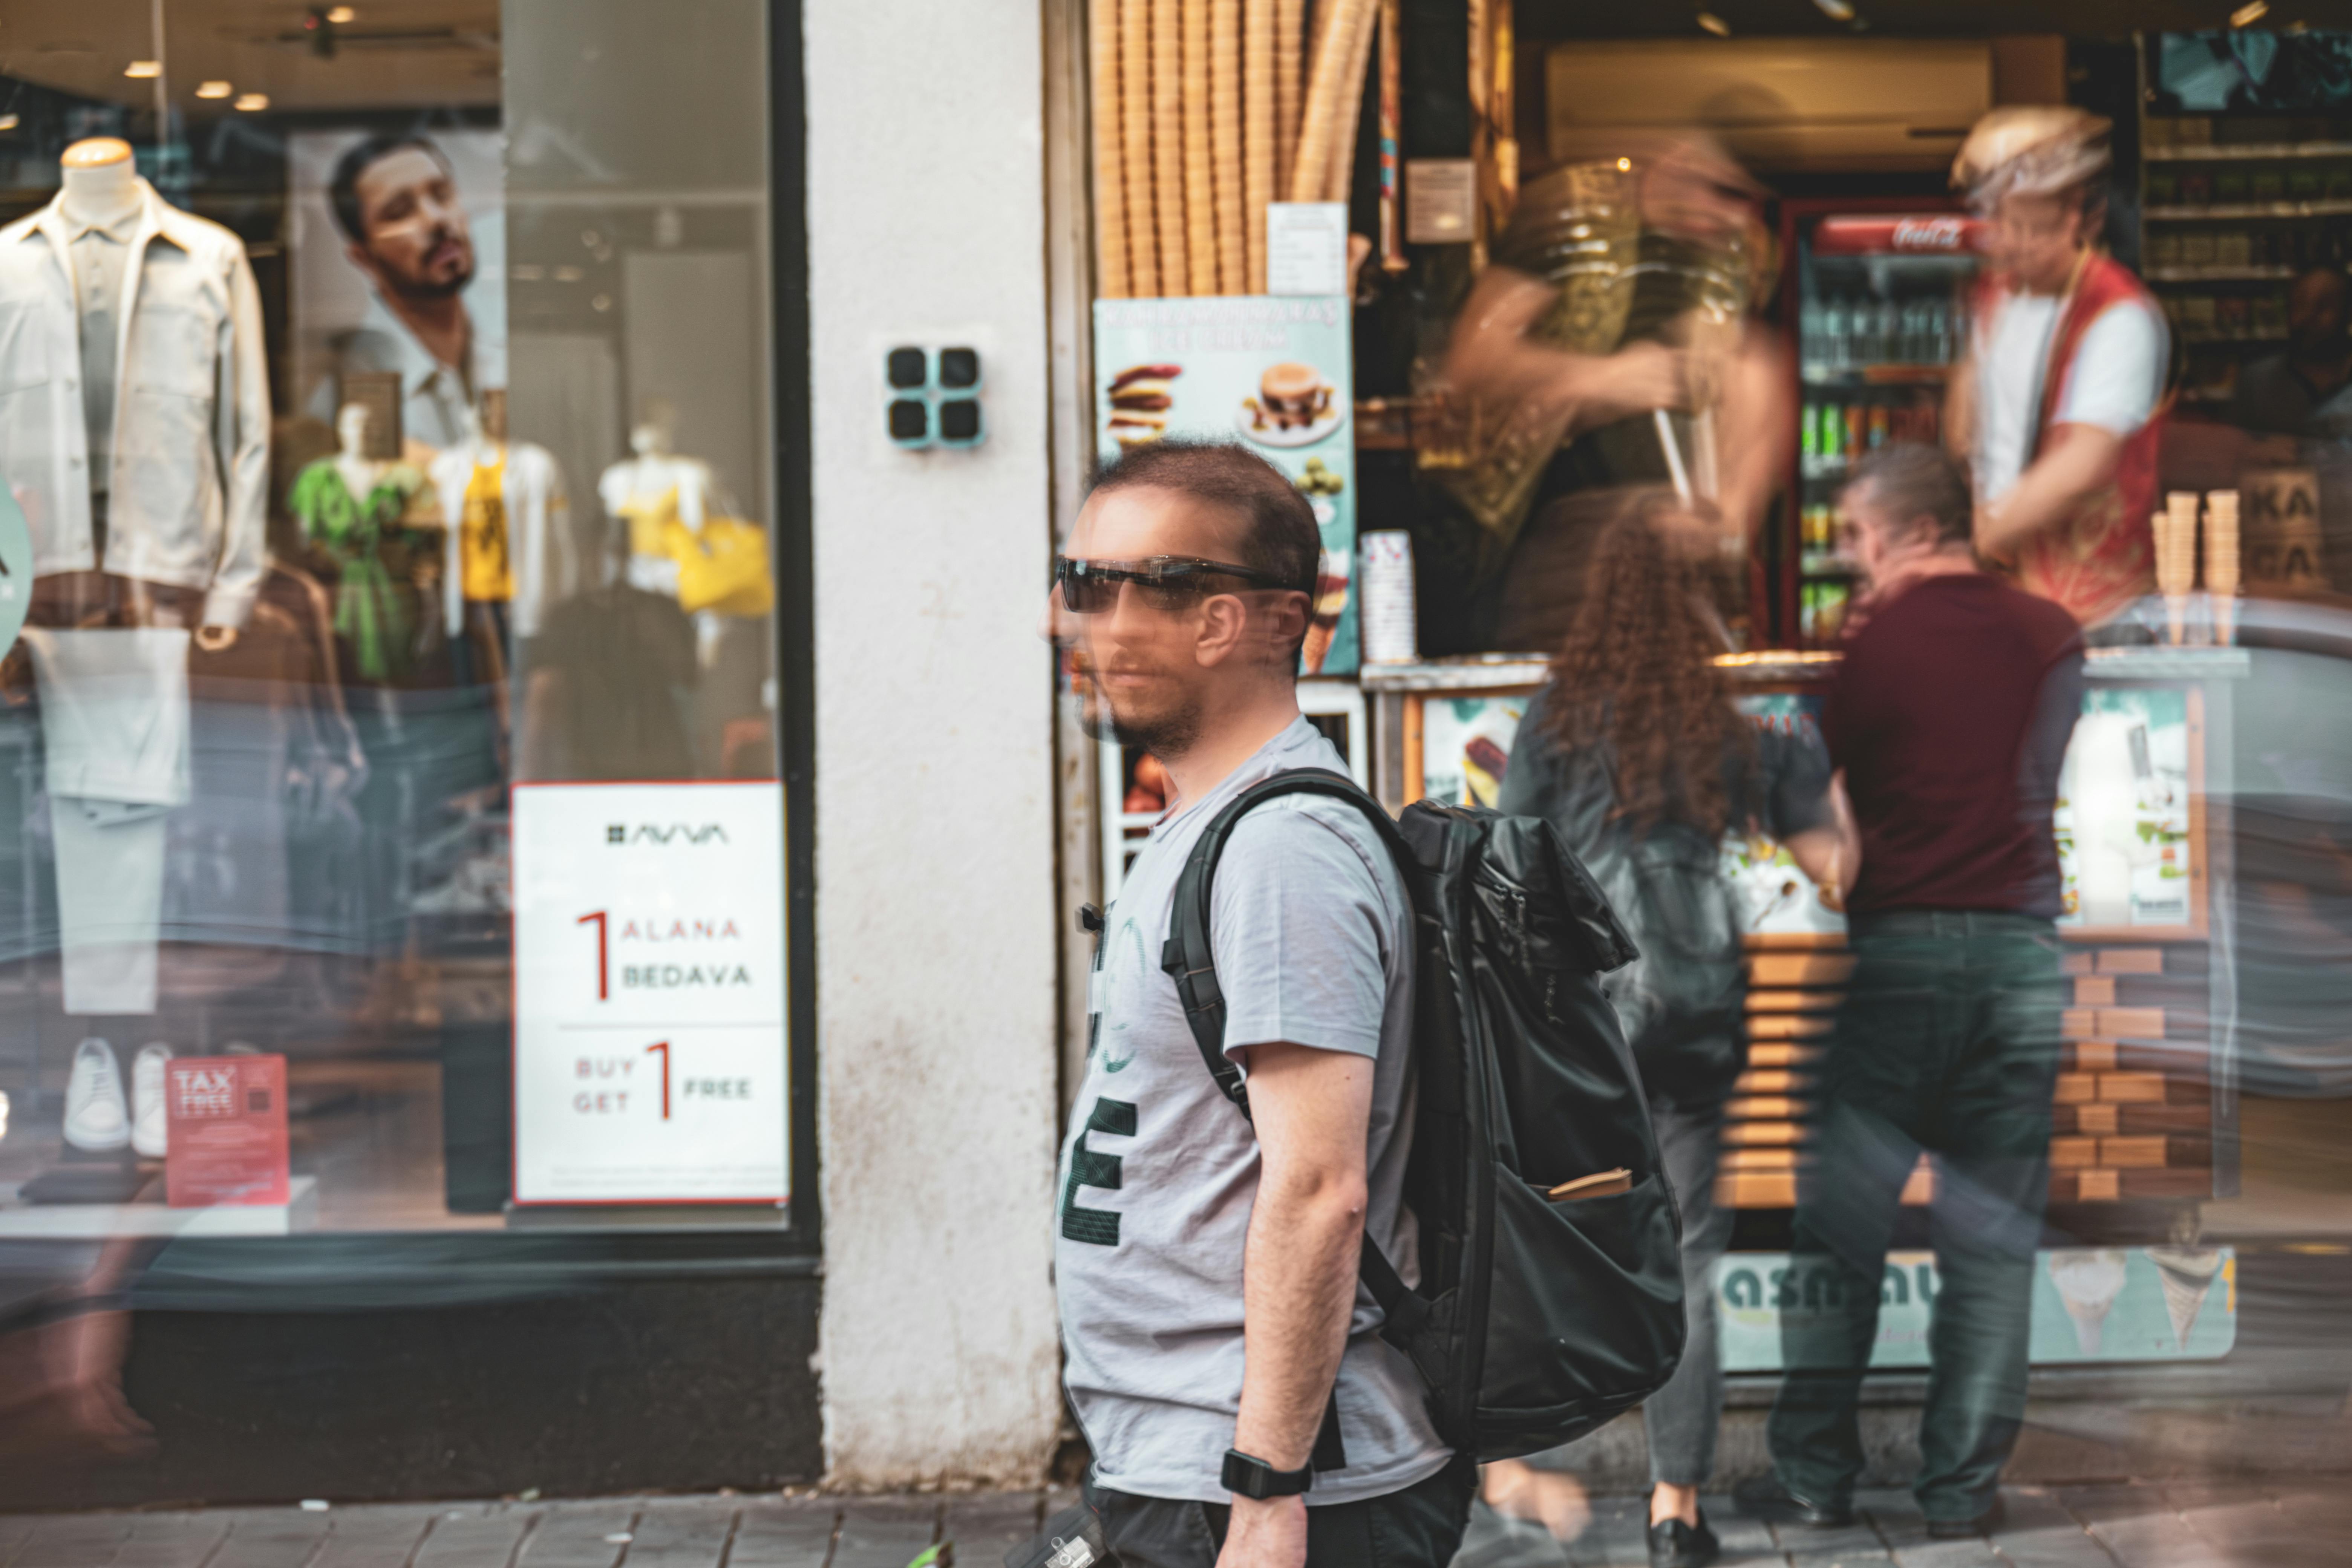 blurred man with backpack walking on sidewalk